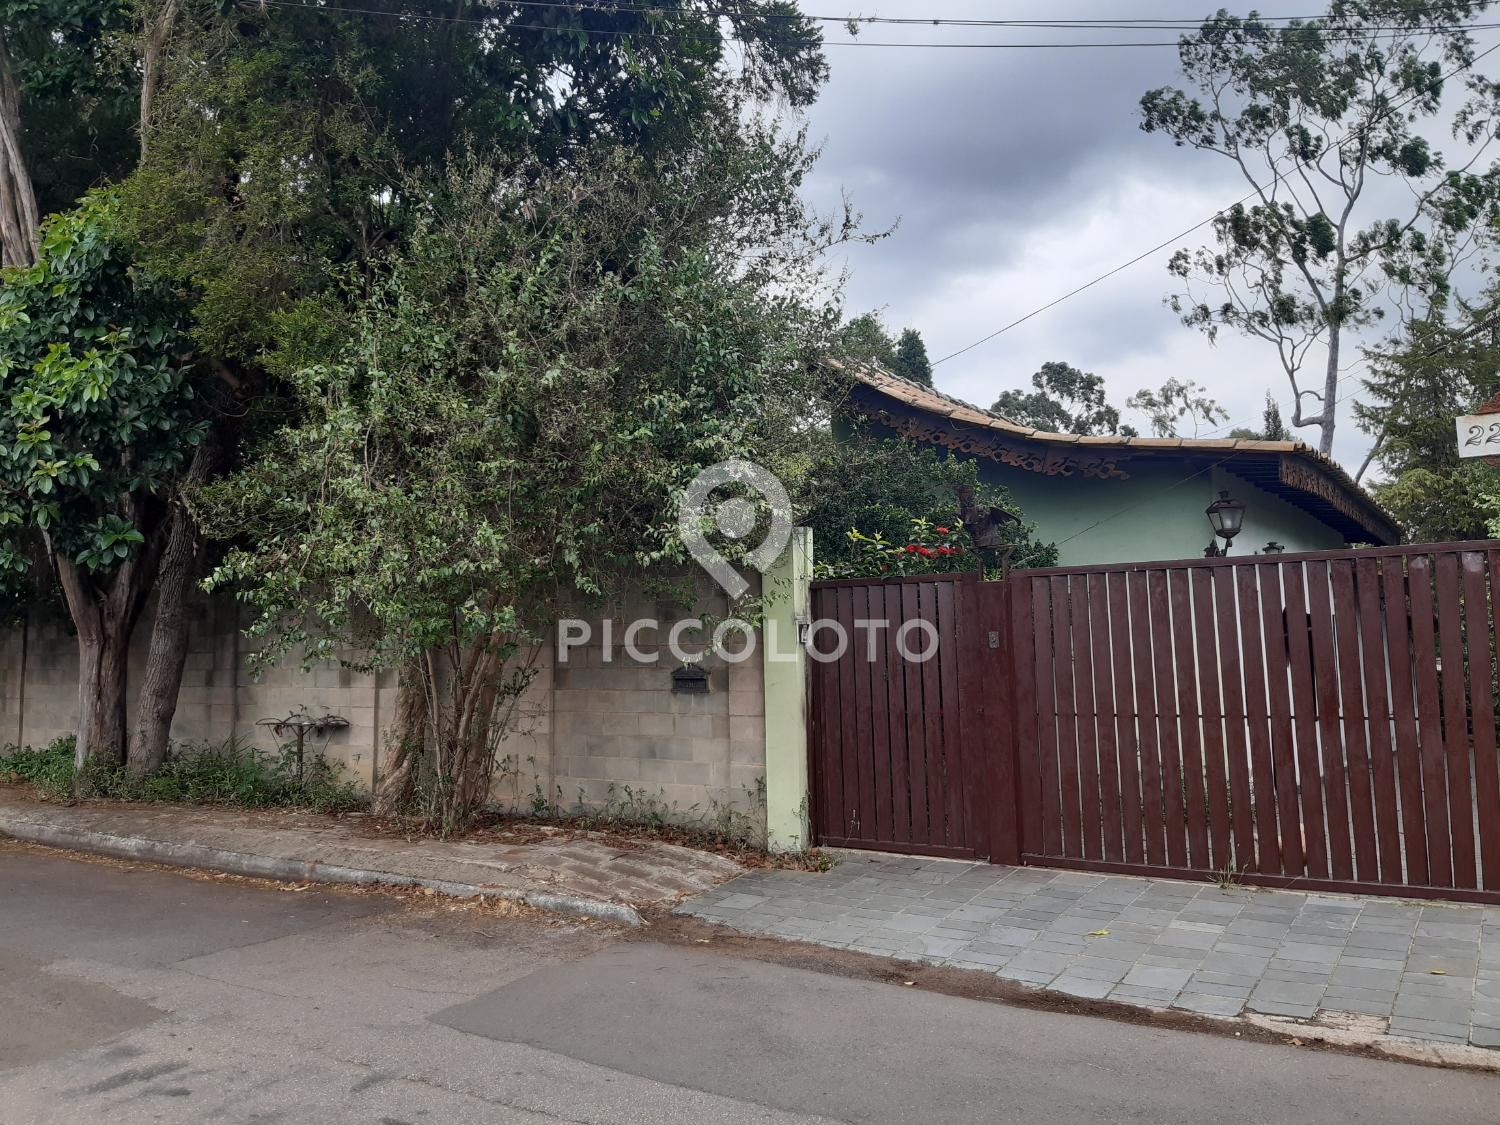 Piccoloto - Casa à venda no Arruamento Fain José Feres em Campinas